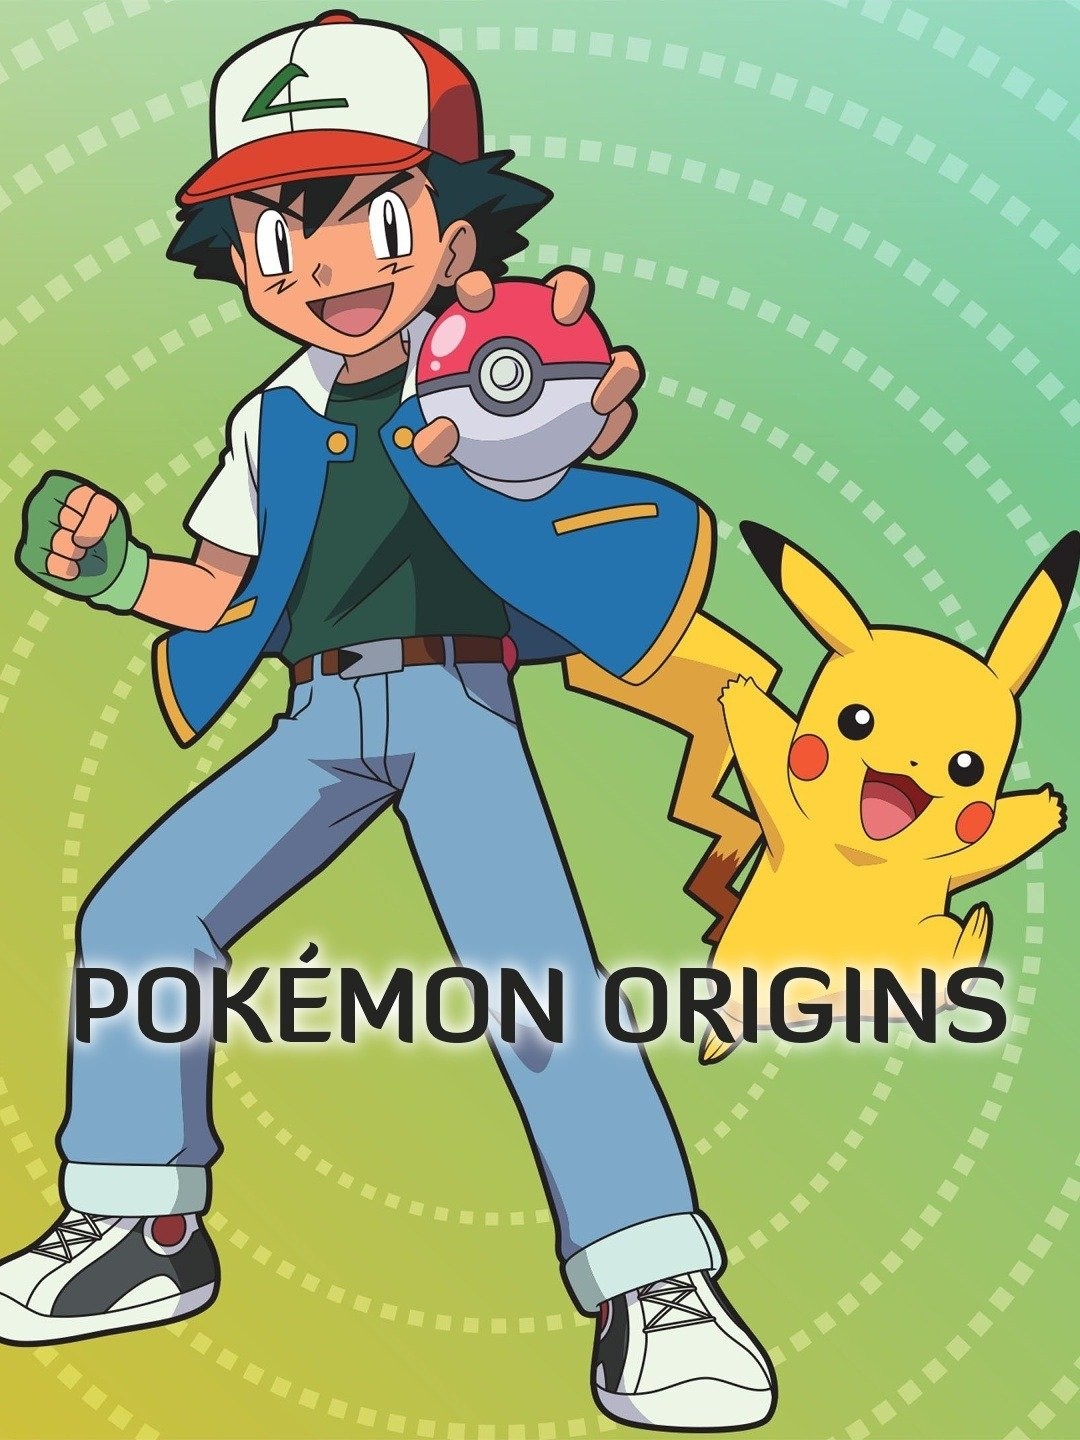 Want a Pokémon Red and Blue movie? Watch the Pokémon Origins anime